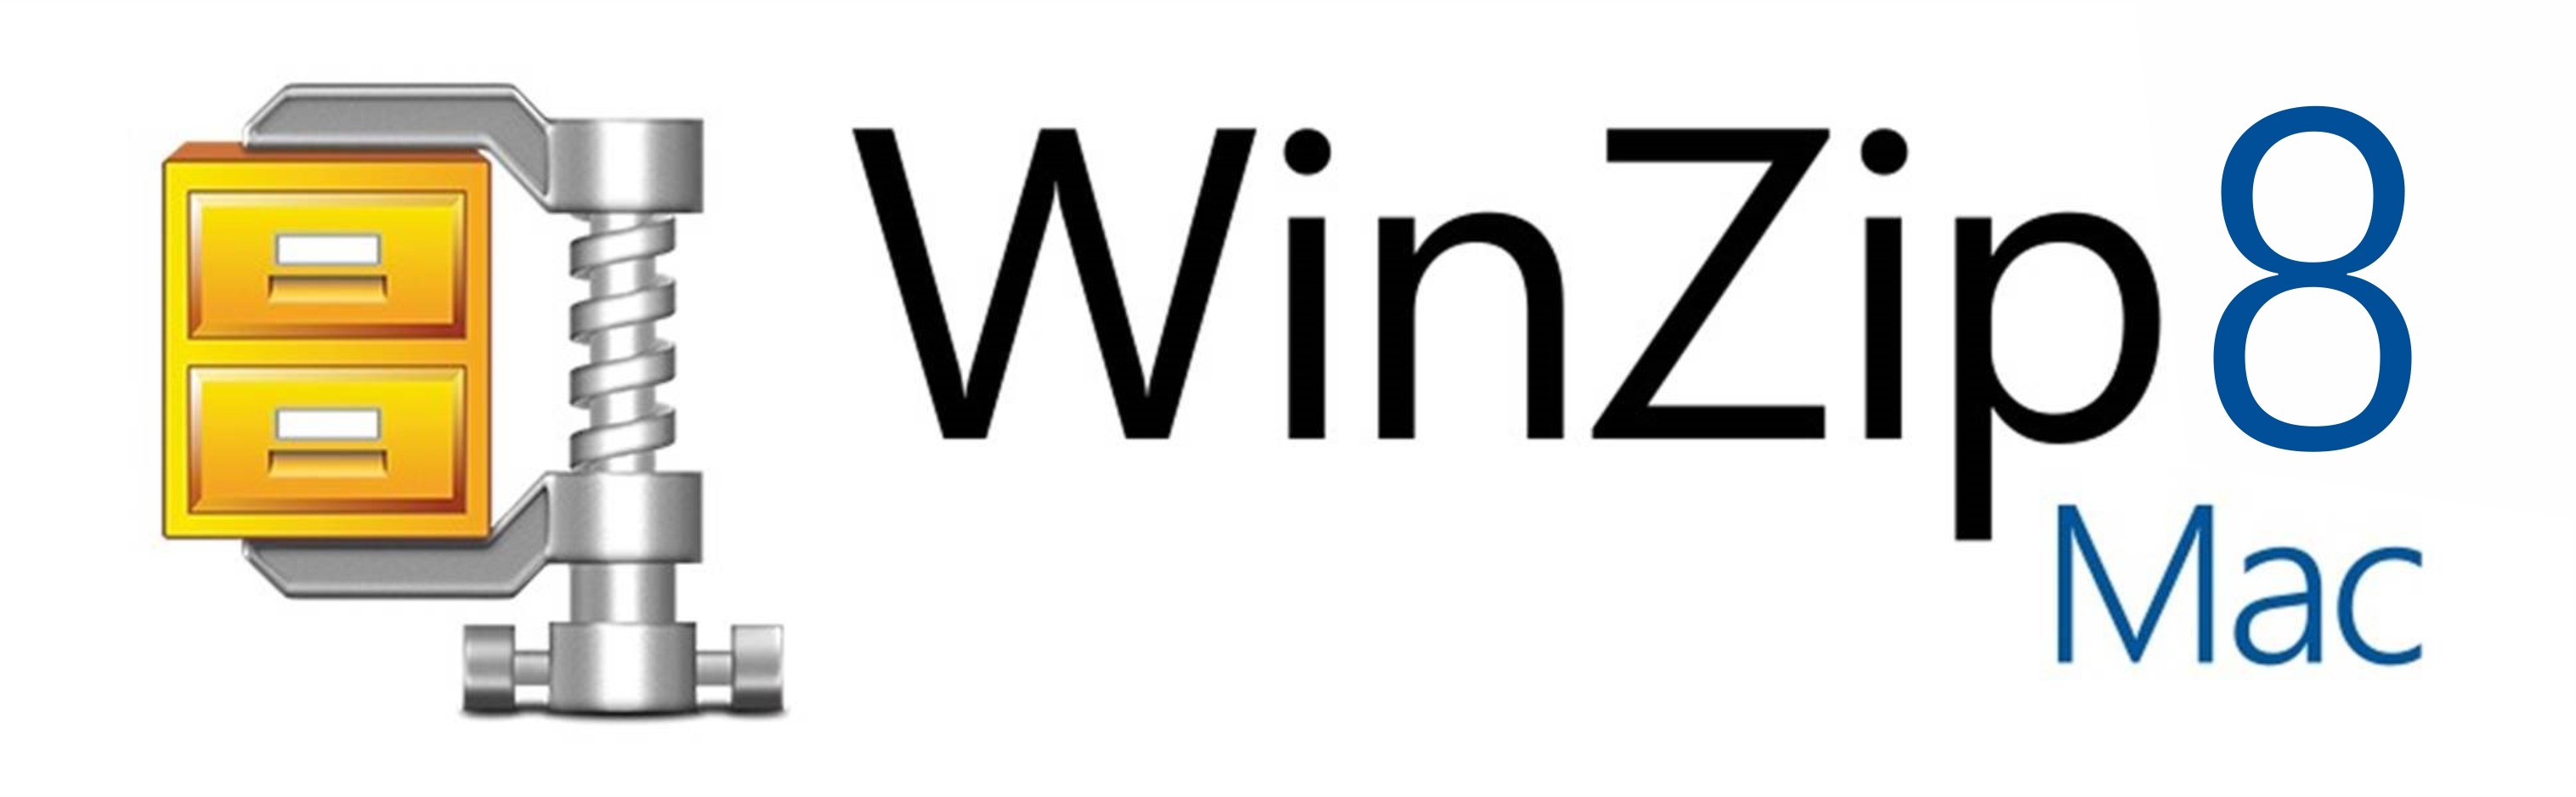 winzip 8 free download full version